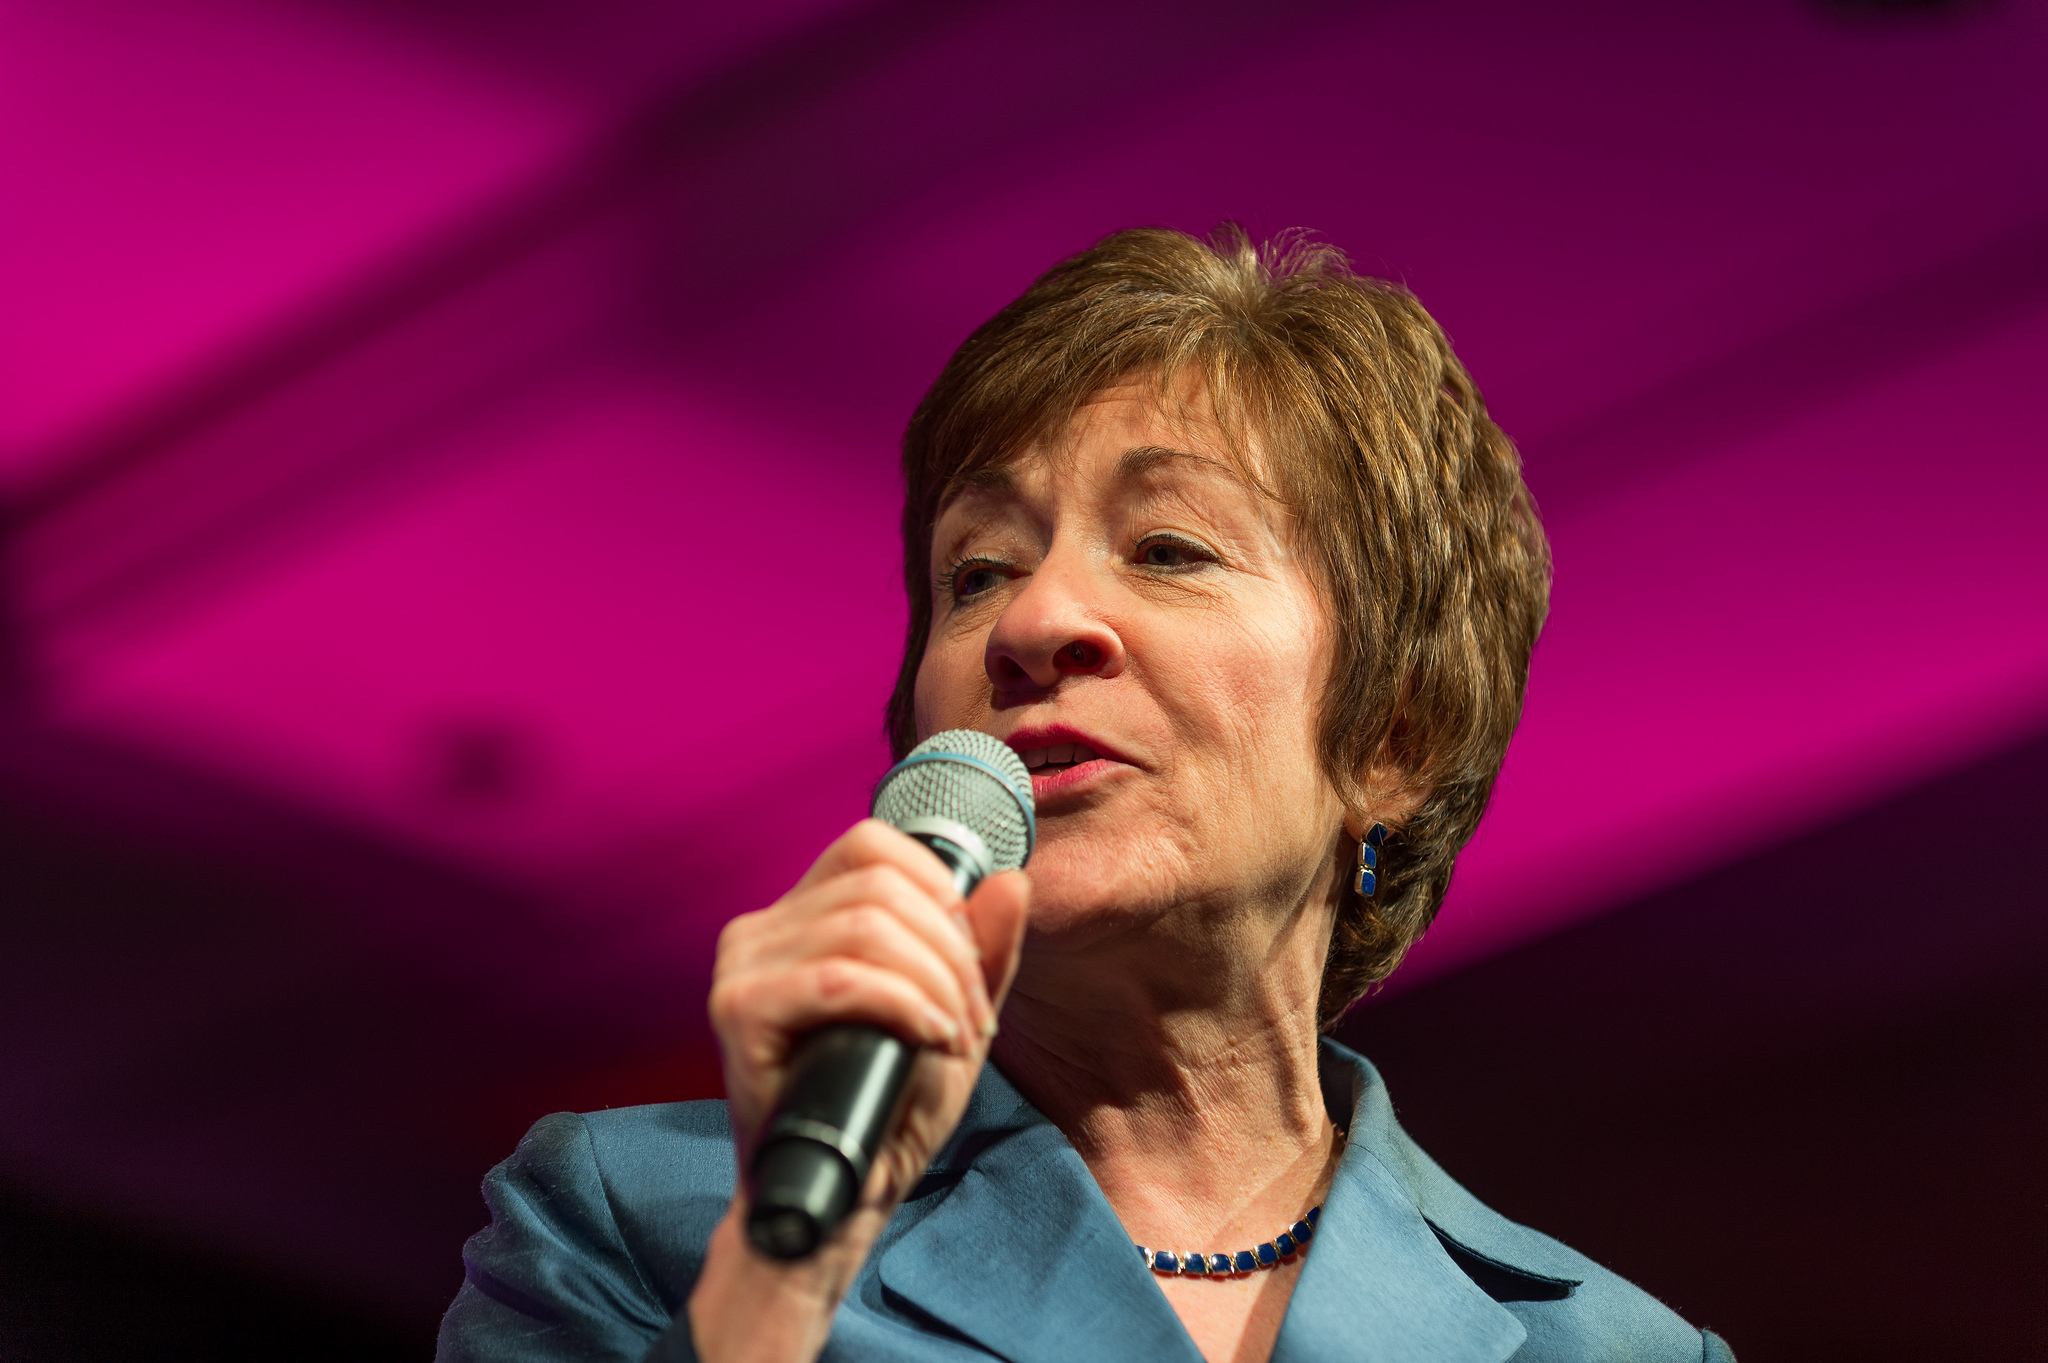 Senator Susan Collins